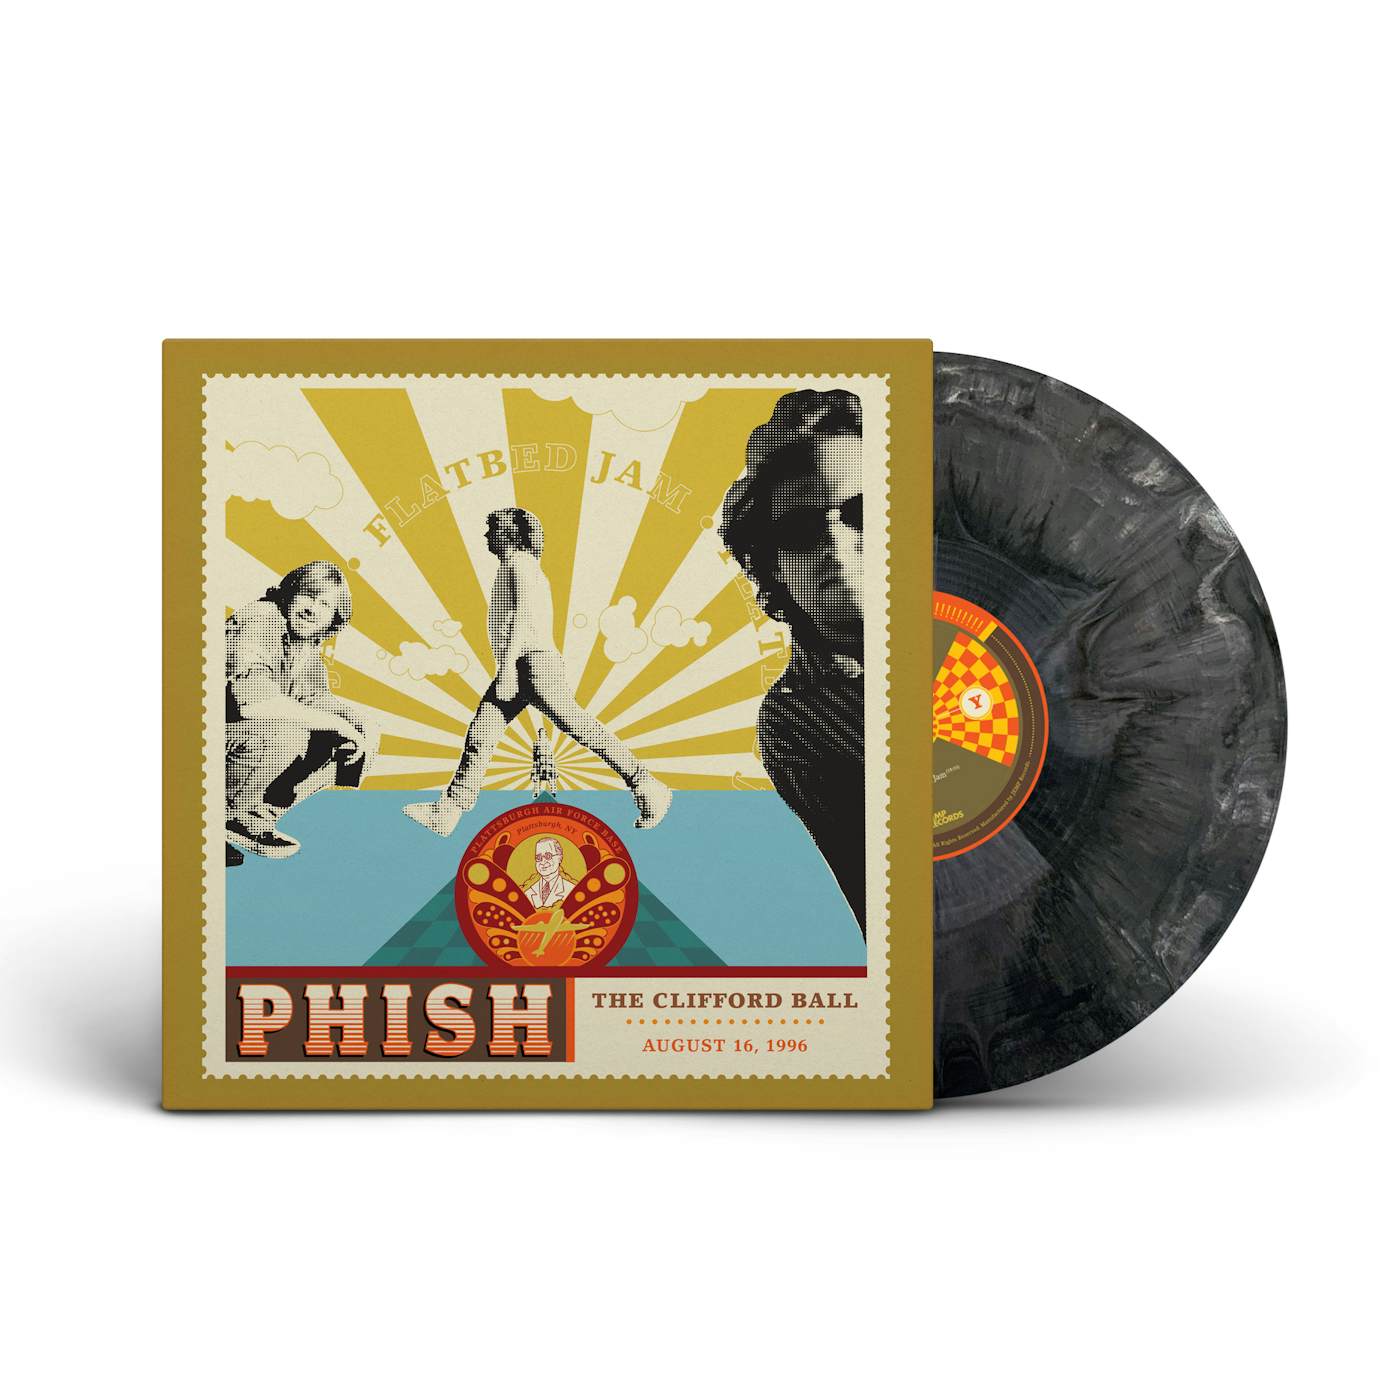 Phish The Clifford Ball "Flatbed Jam" Vinyl LP